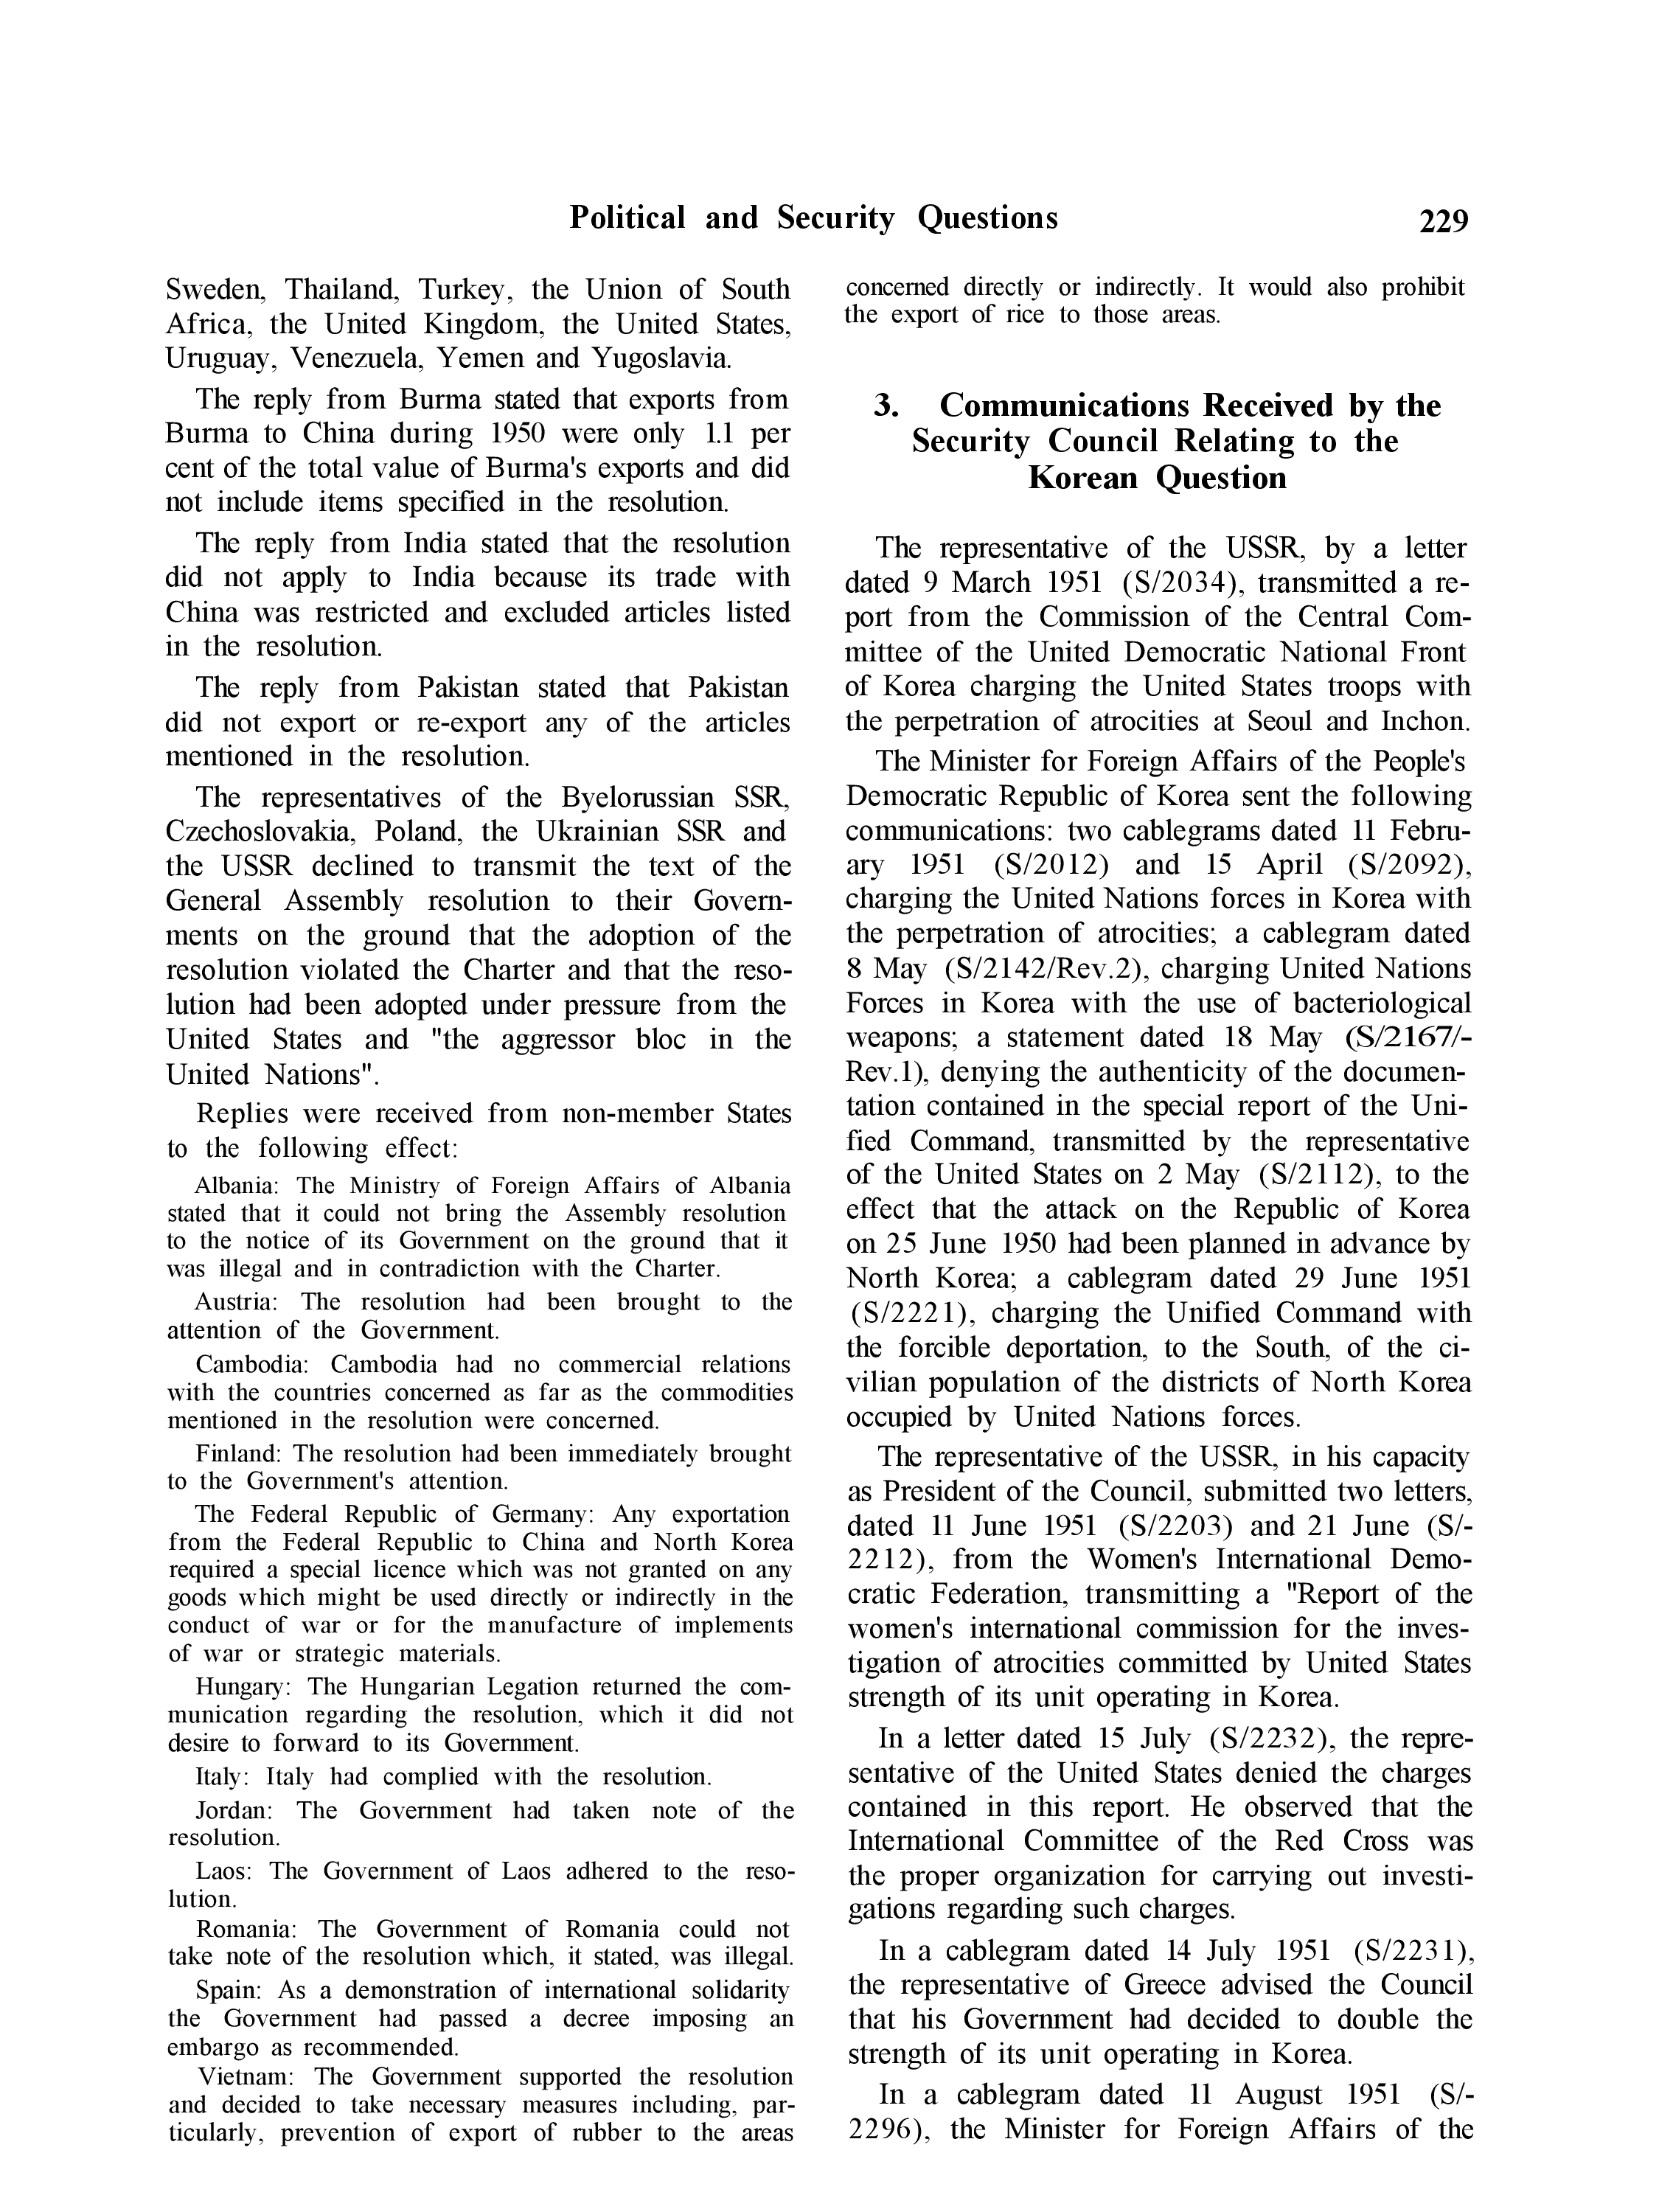 YUN Volume_Page 1951_239